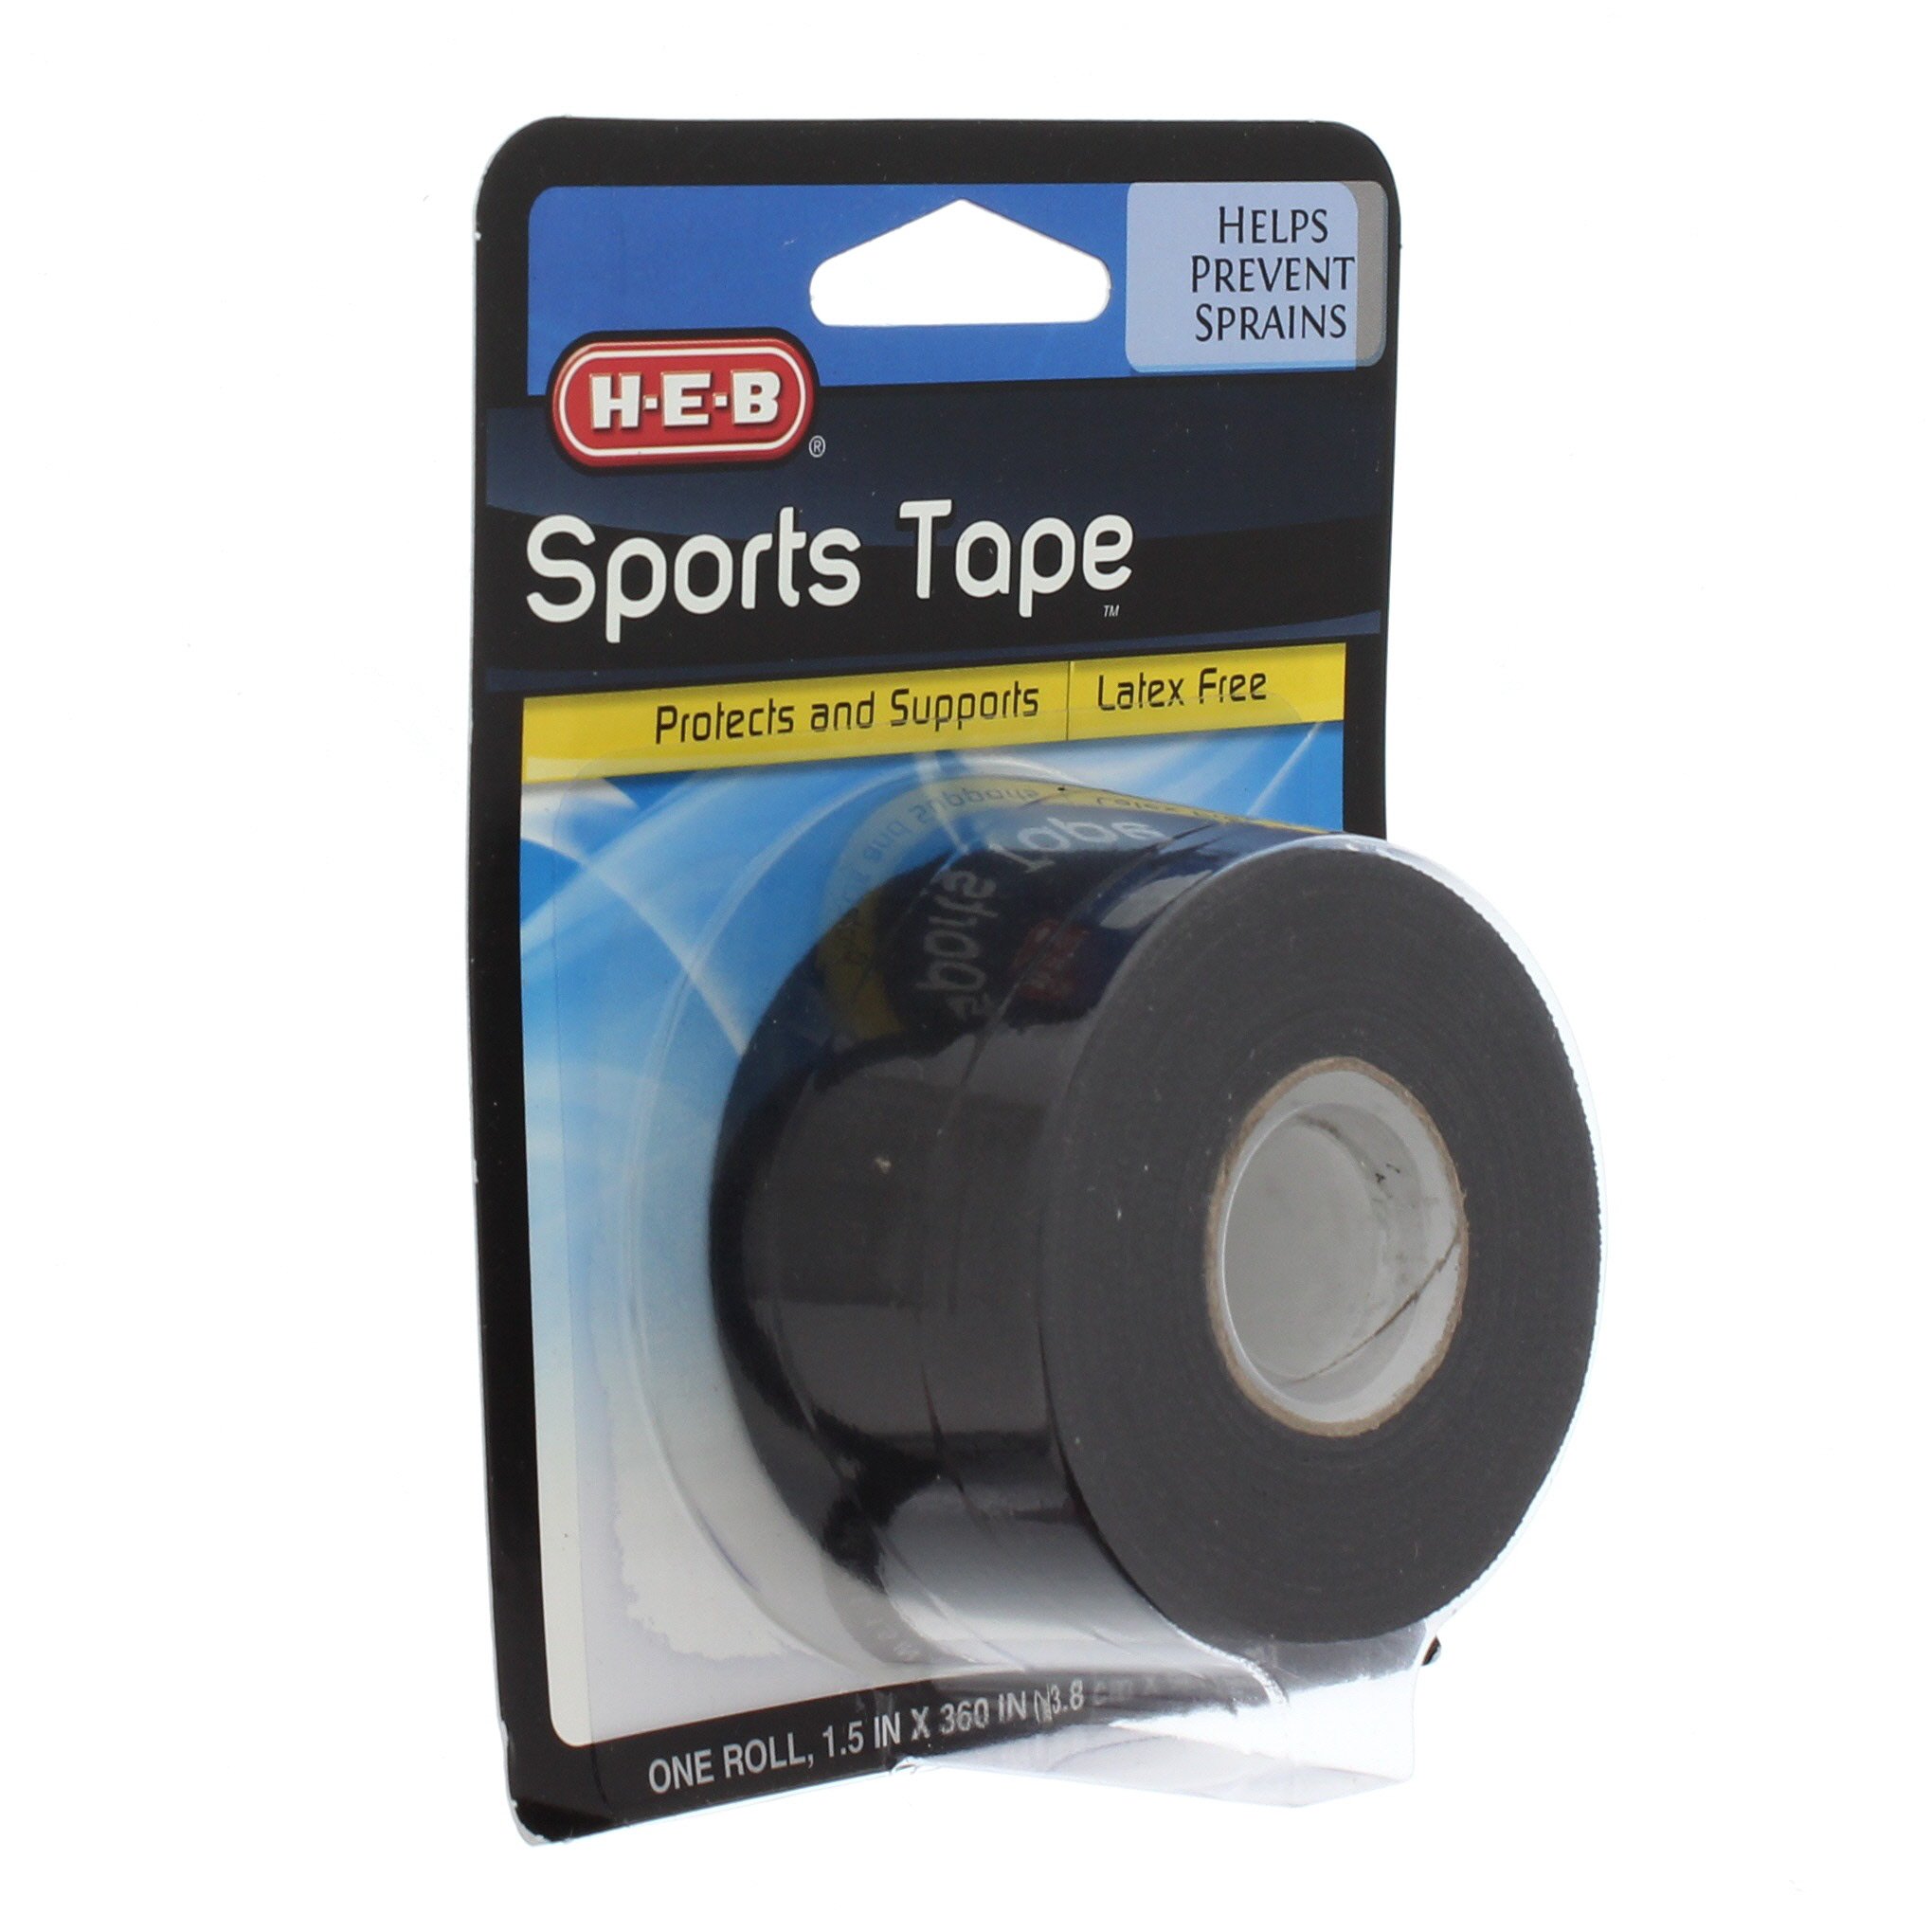 Sport Tape